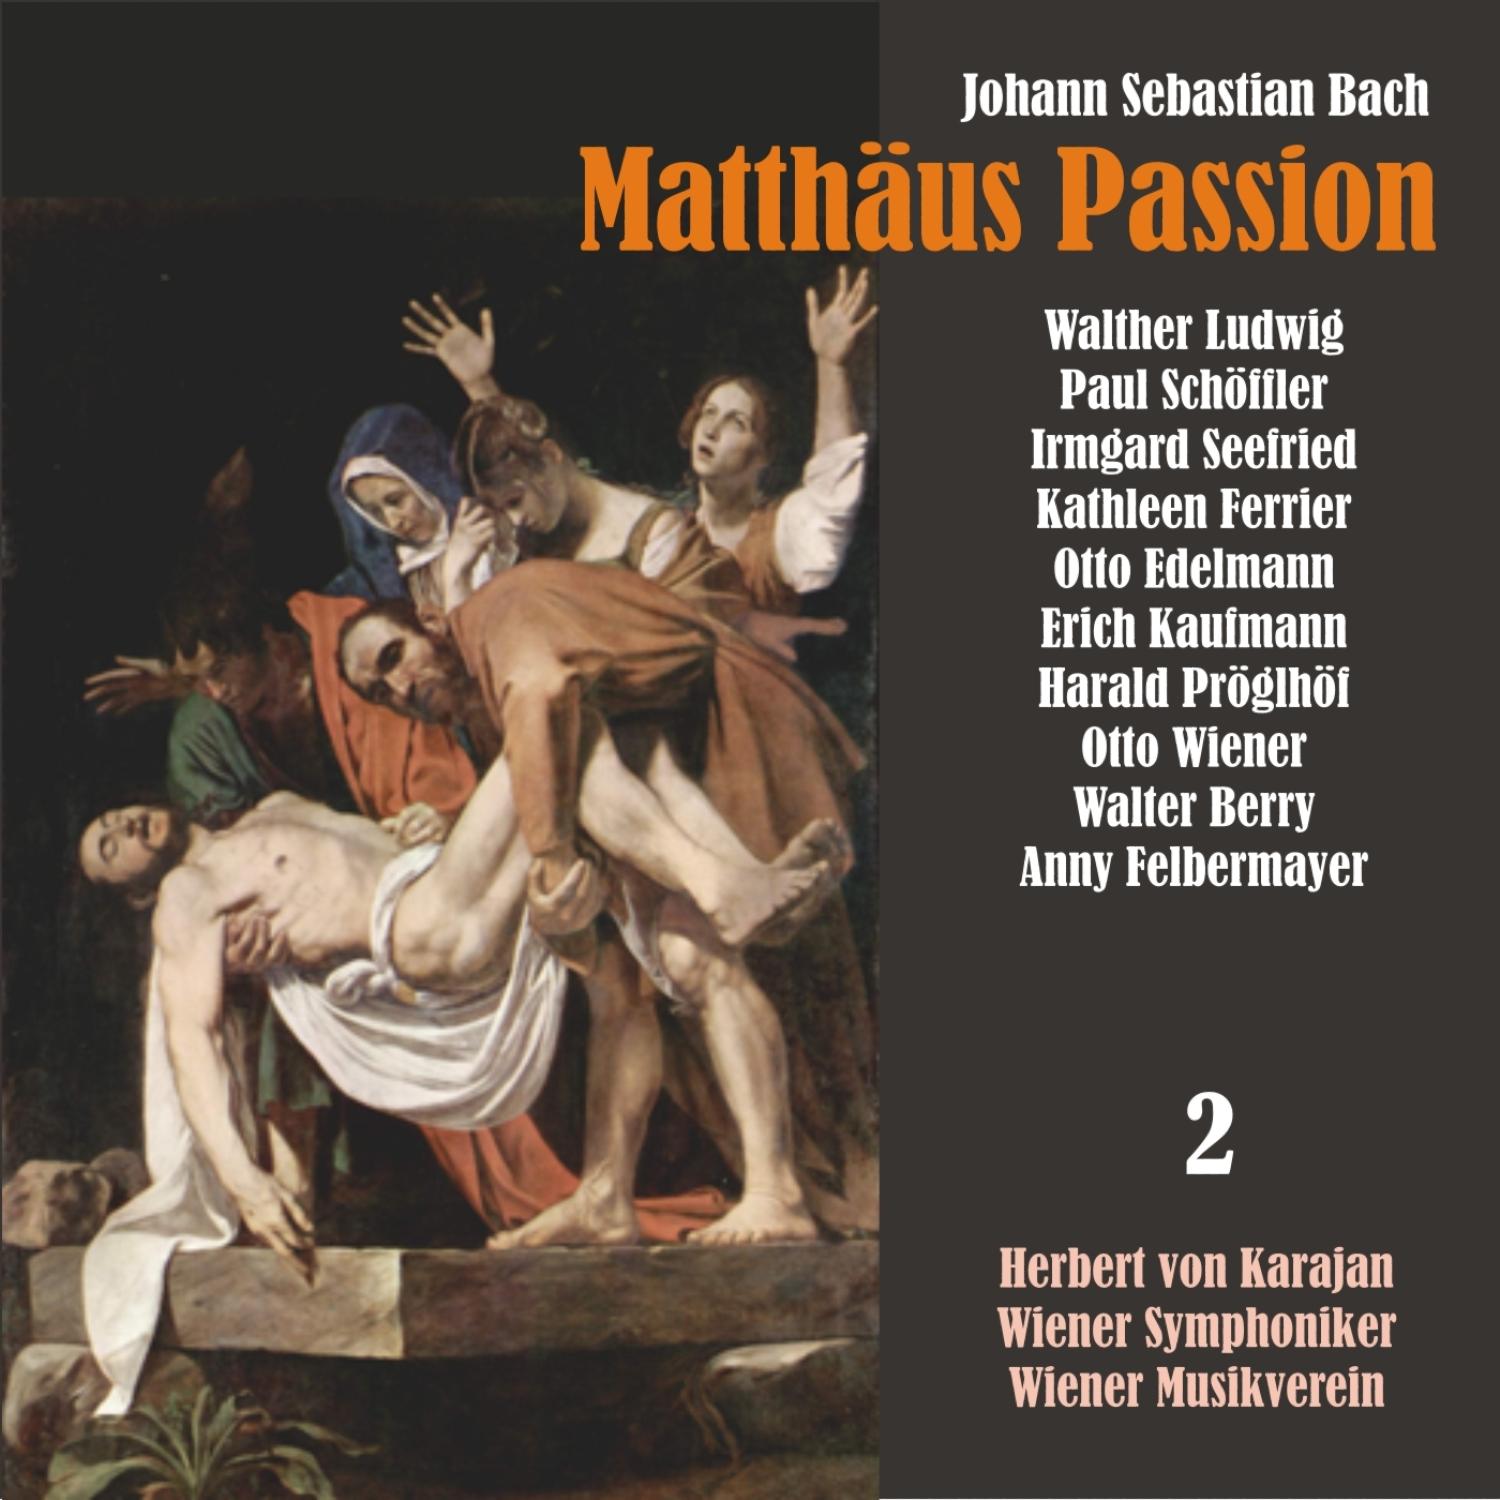 Matthäus Passion, BWV 244: "Erbarme dith"